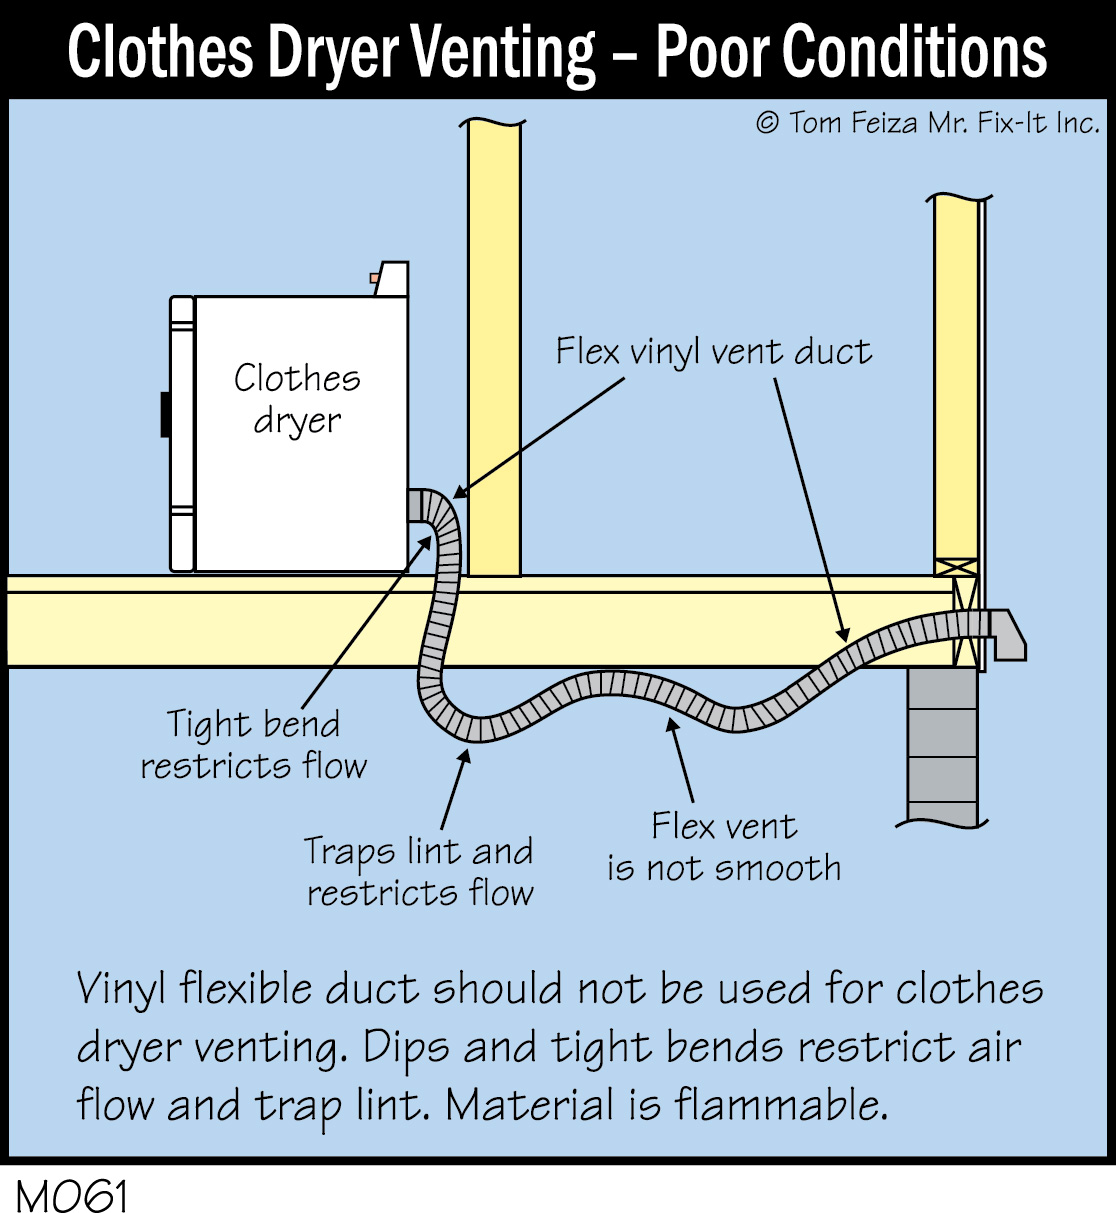 M061C - Clothes Dryer Venting - Poor Conditions_300dpi